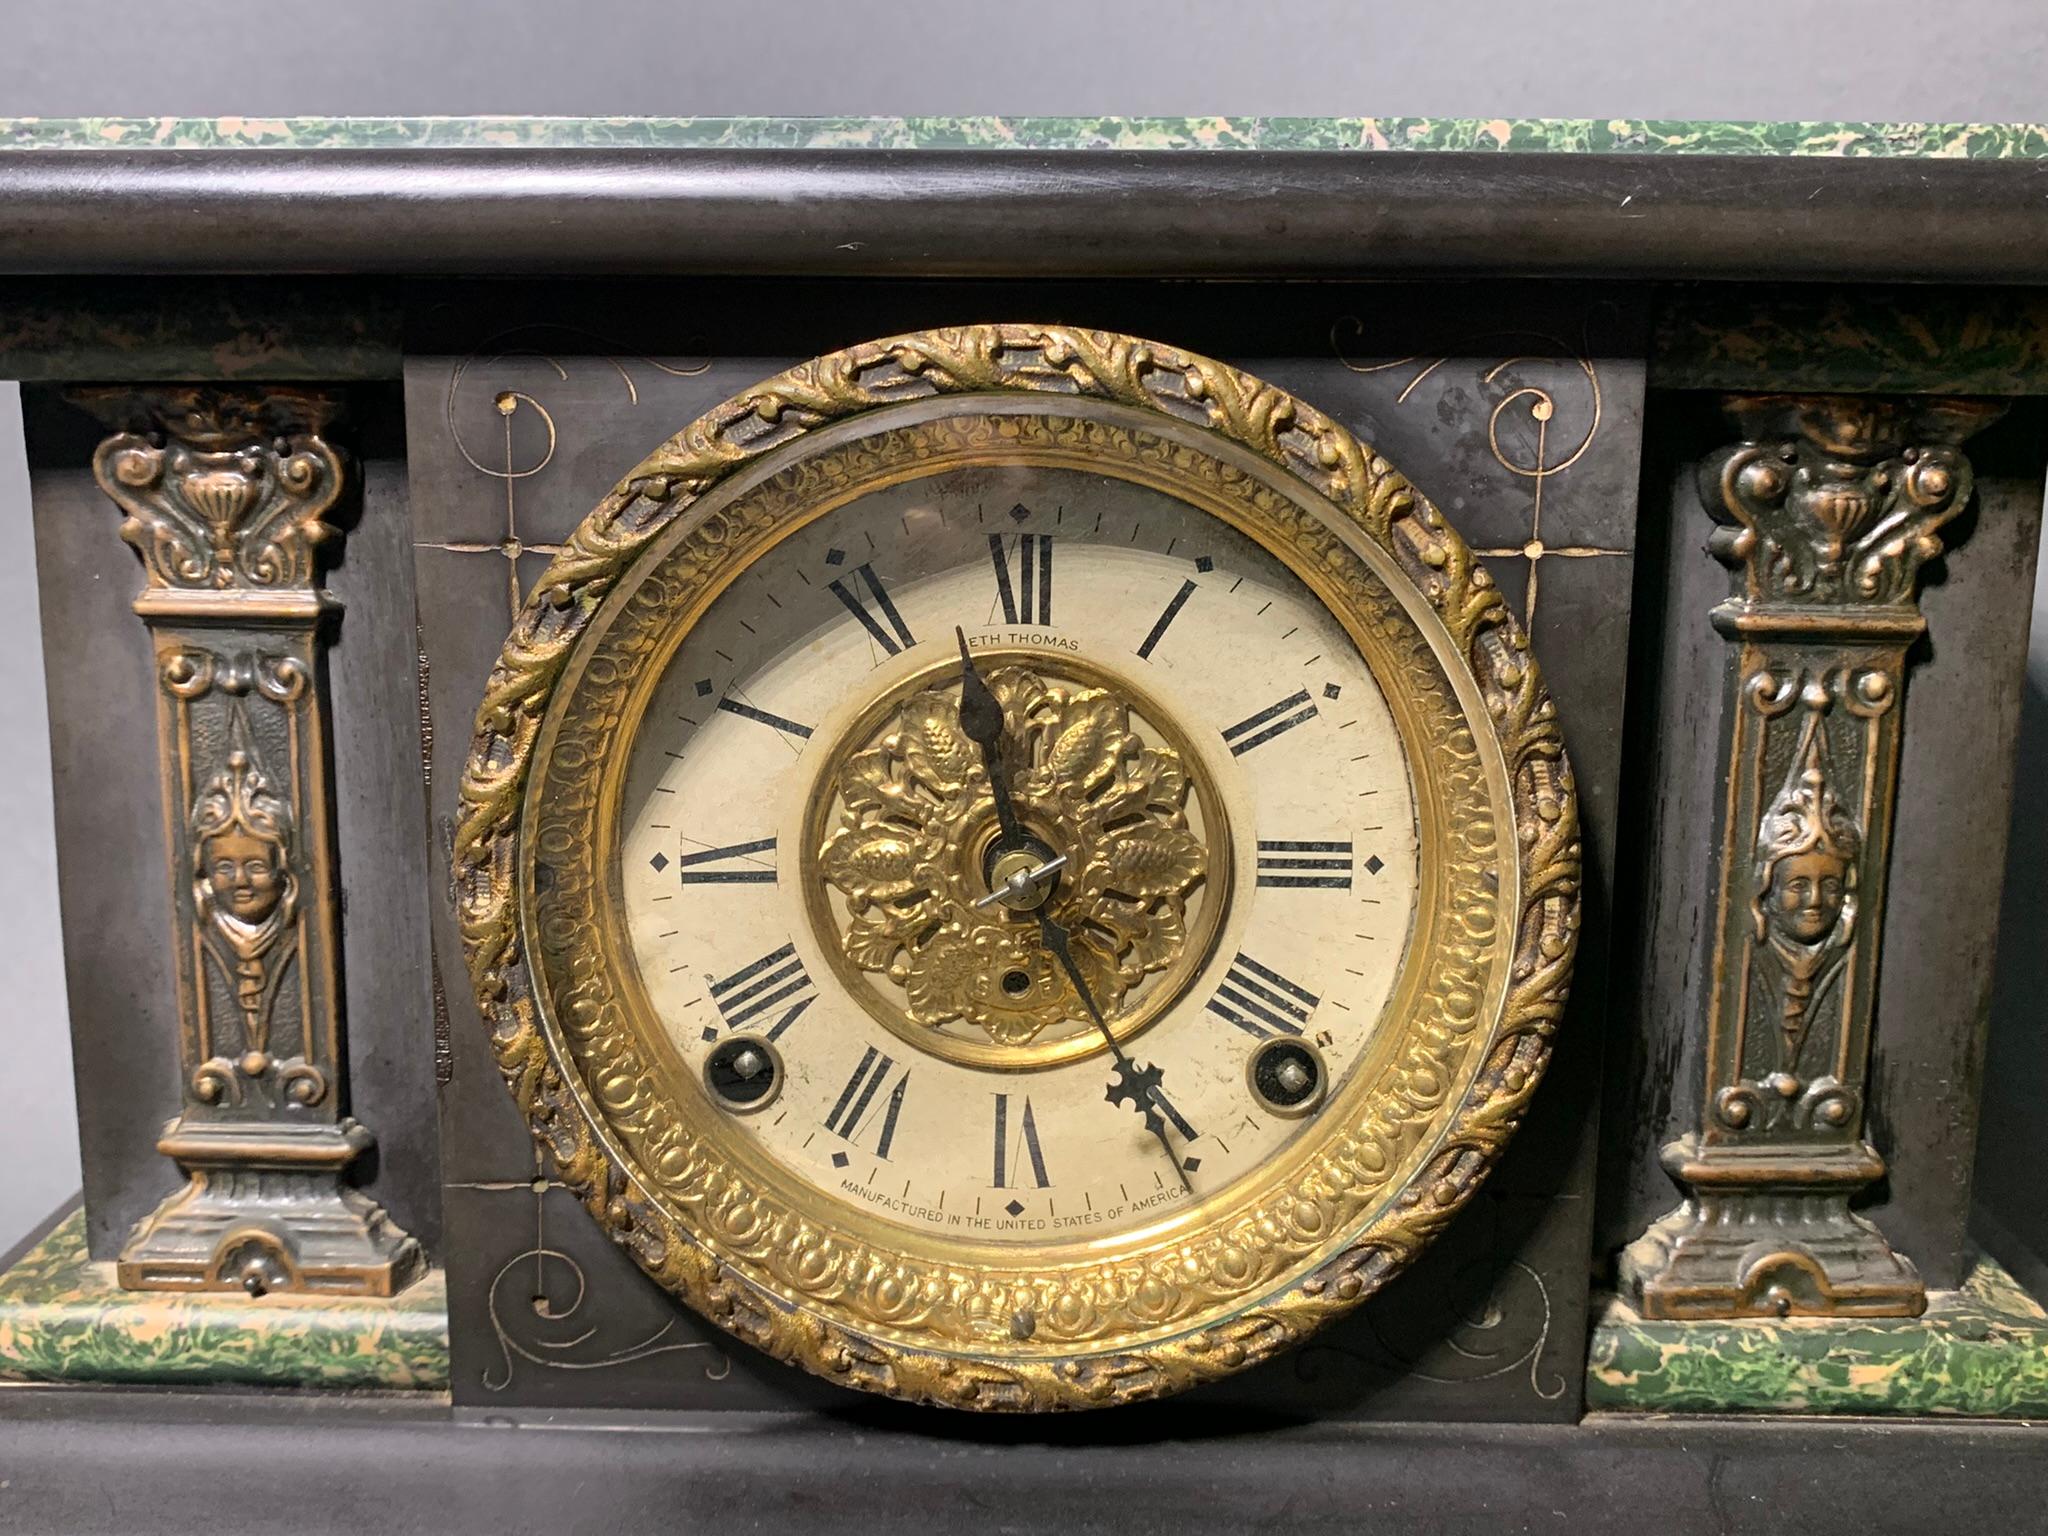 Seth Thomas Clock Co. Mantel Clock